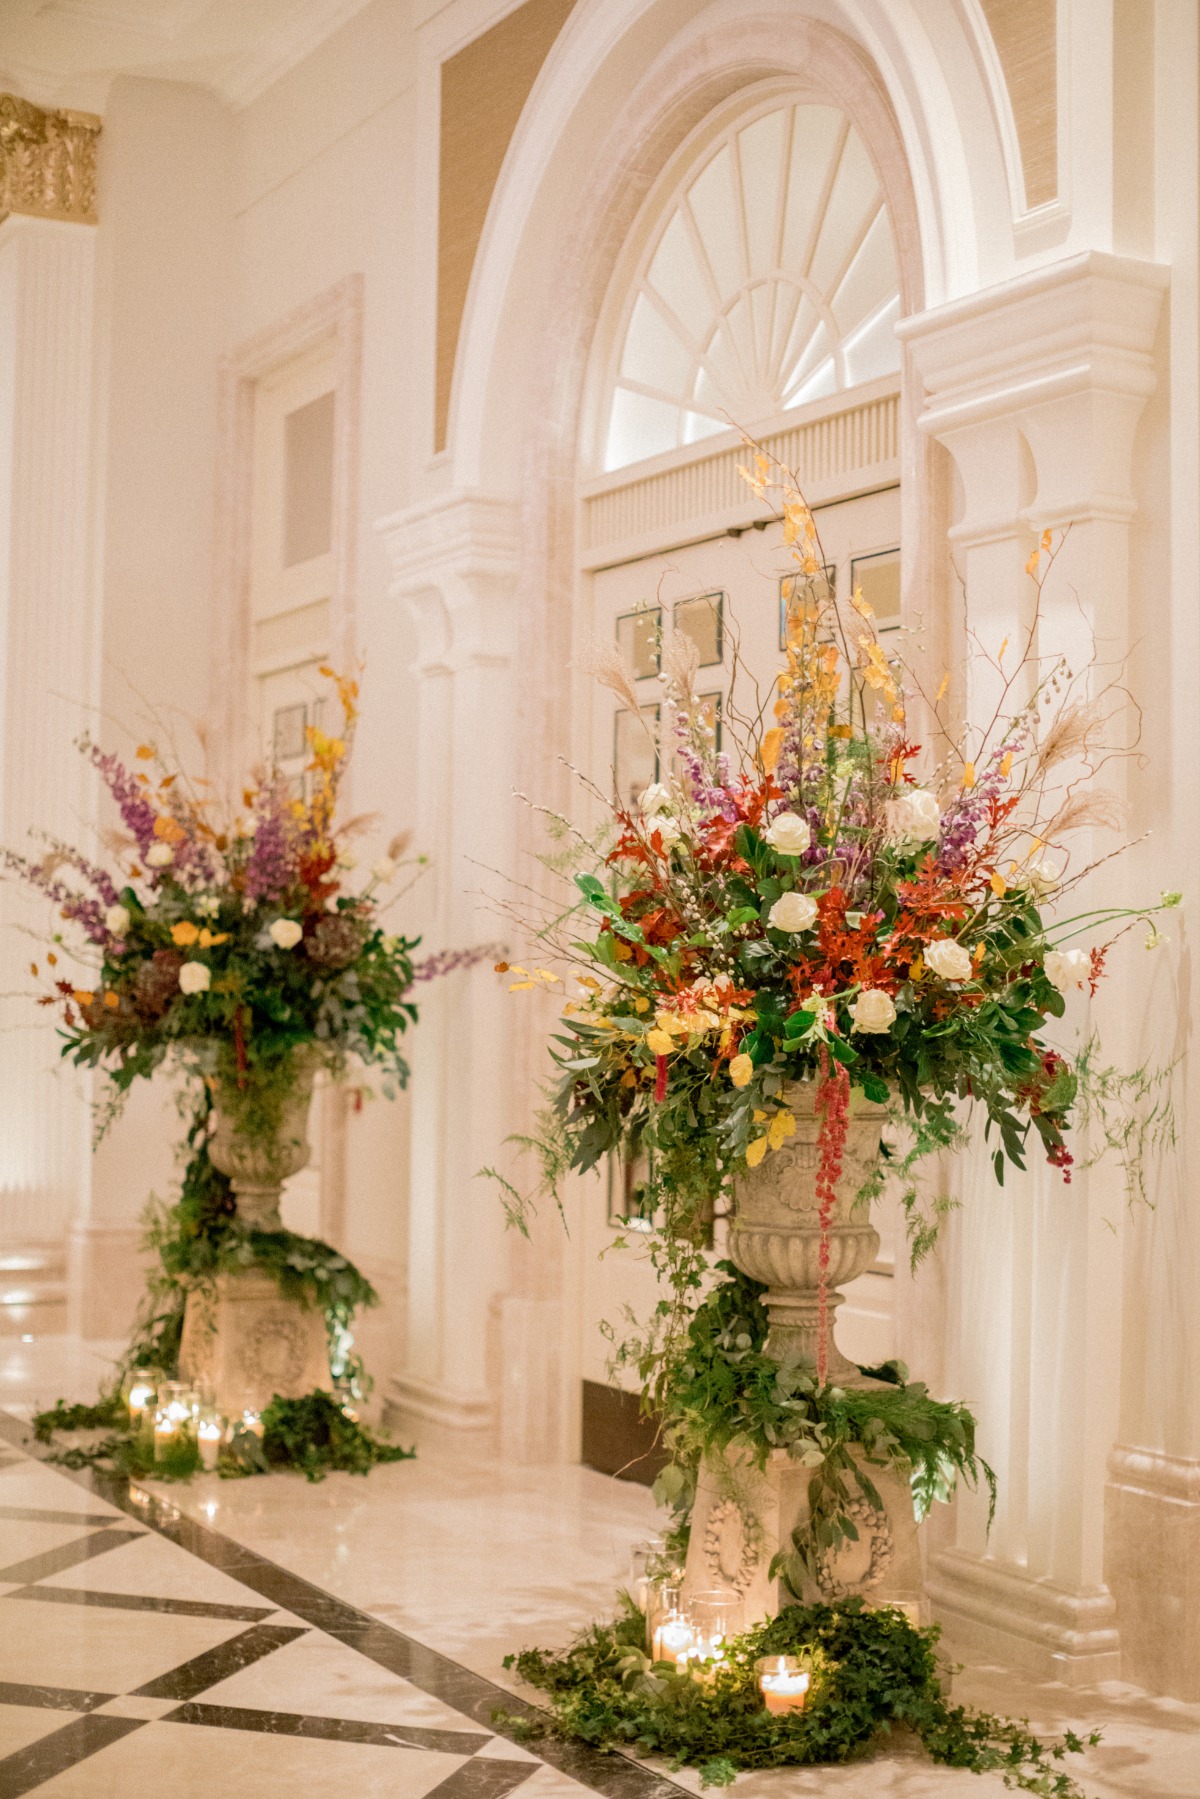 floral arrangements at entrance to wedding